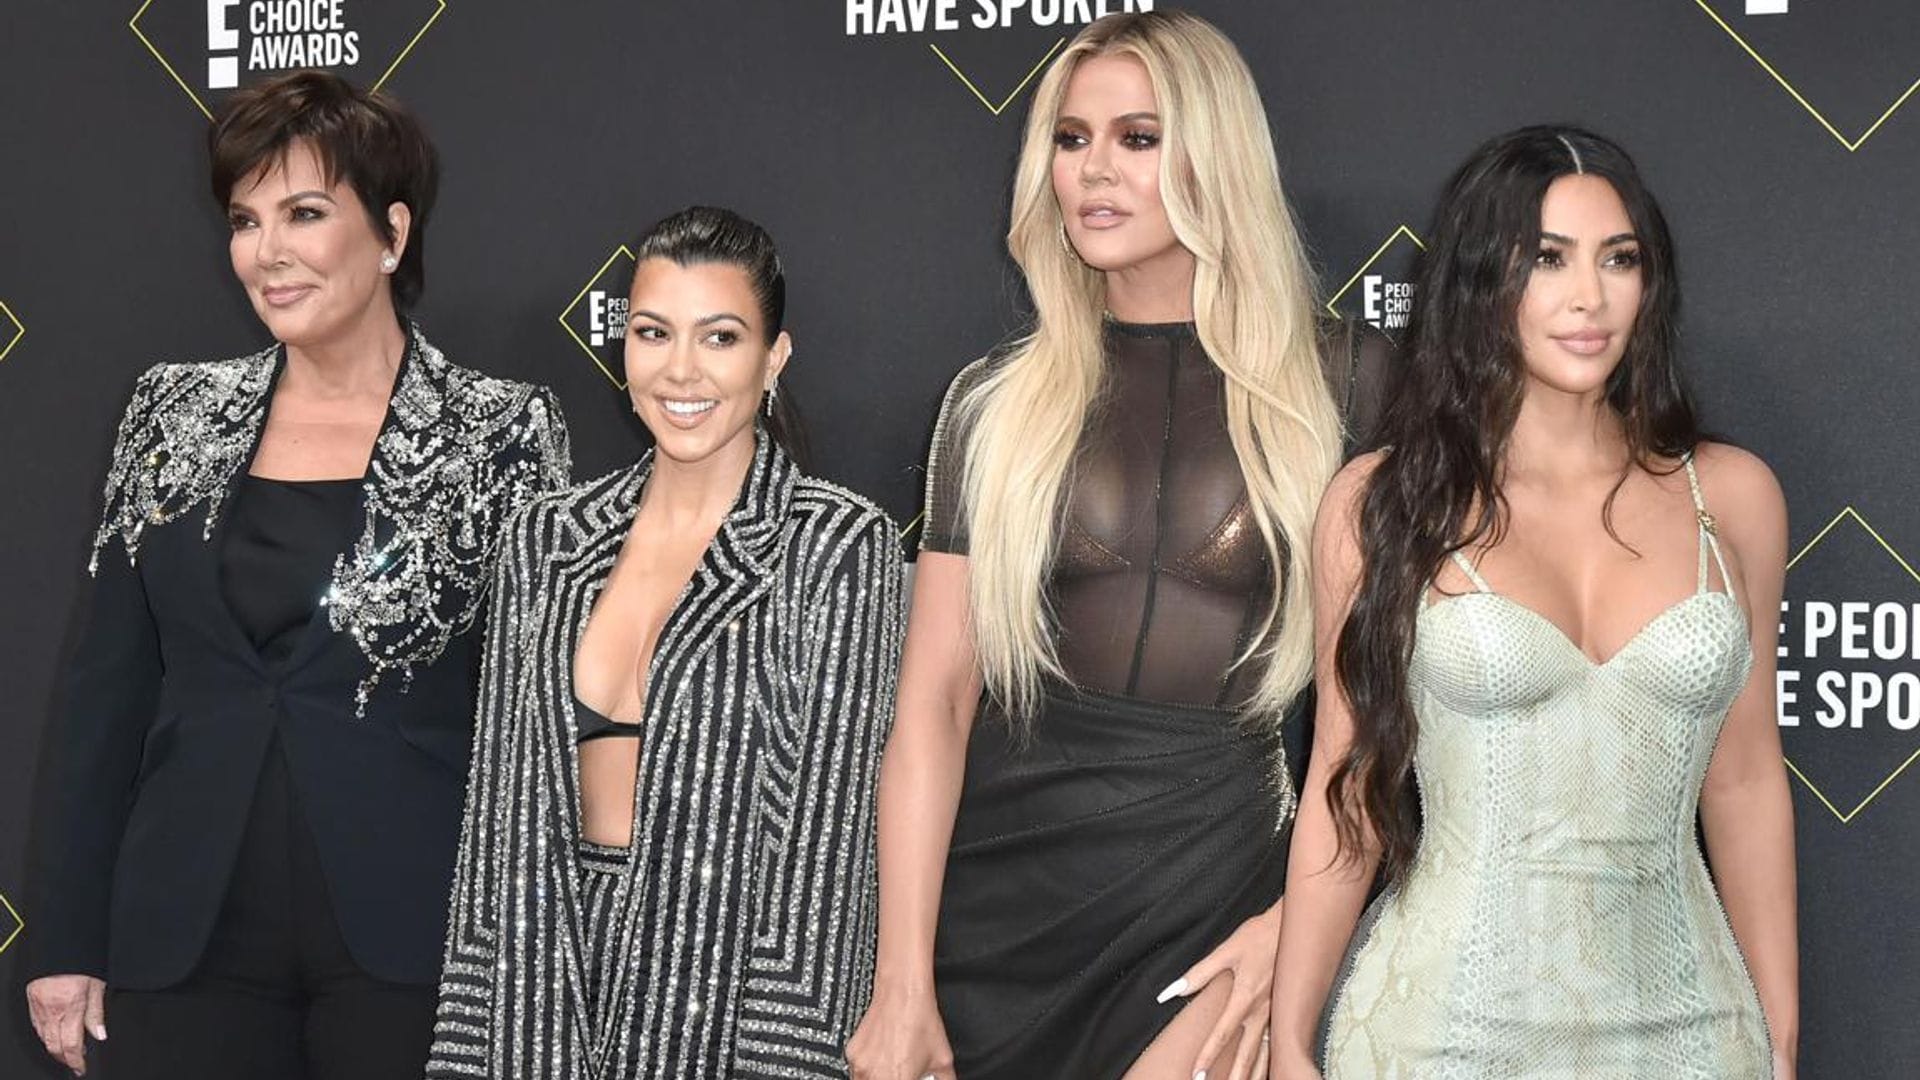 Kardashians spark pregnancy rumors in the new season of KUWTK